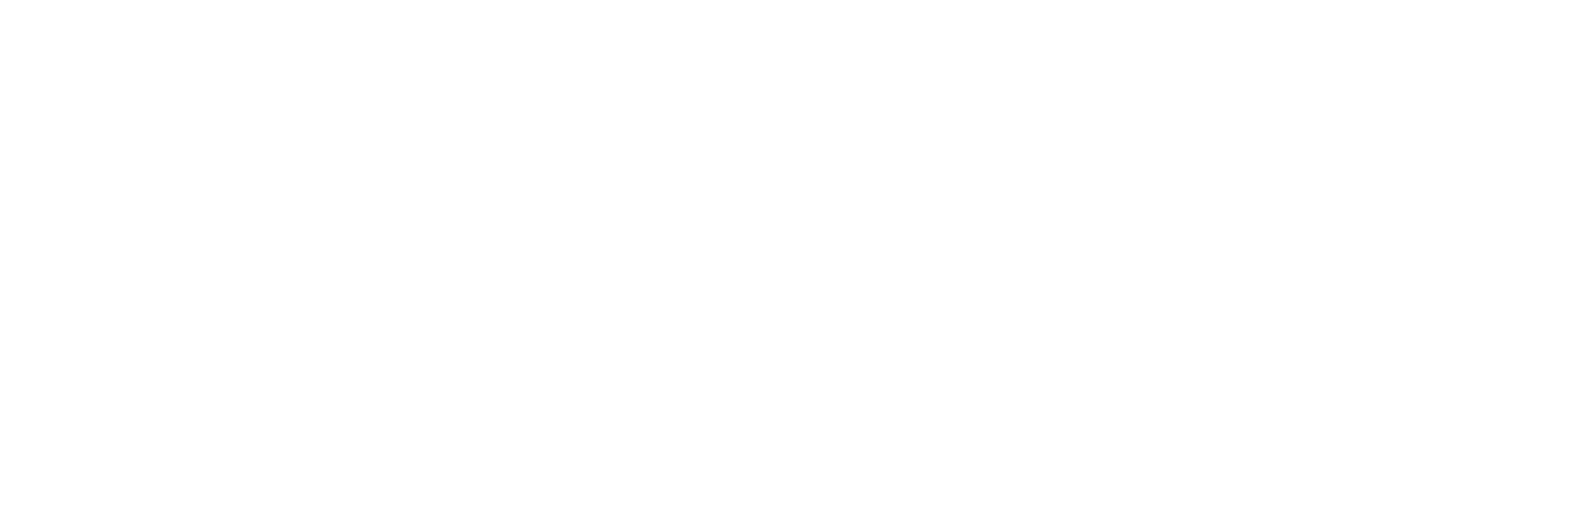 Jubilee Metals Group Logo groß für dunkle Hintergründe (transparentes PNG)